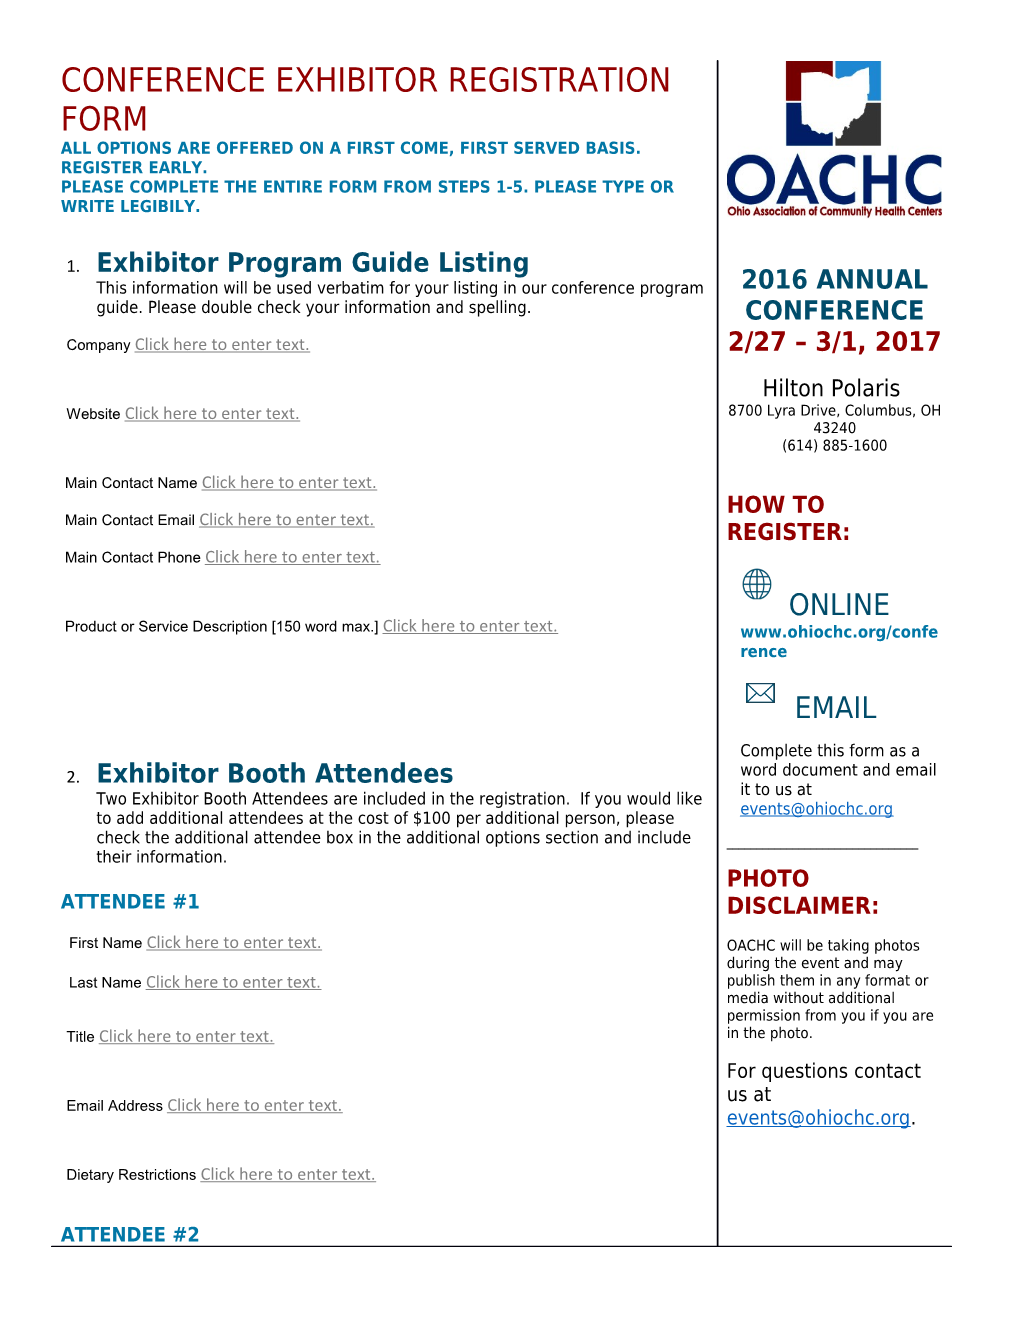 Exhibitor Program Guide Listing